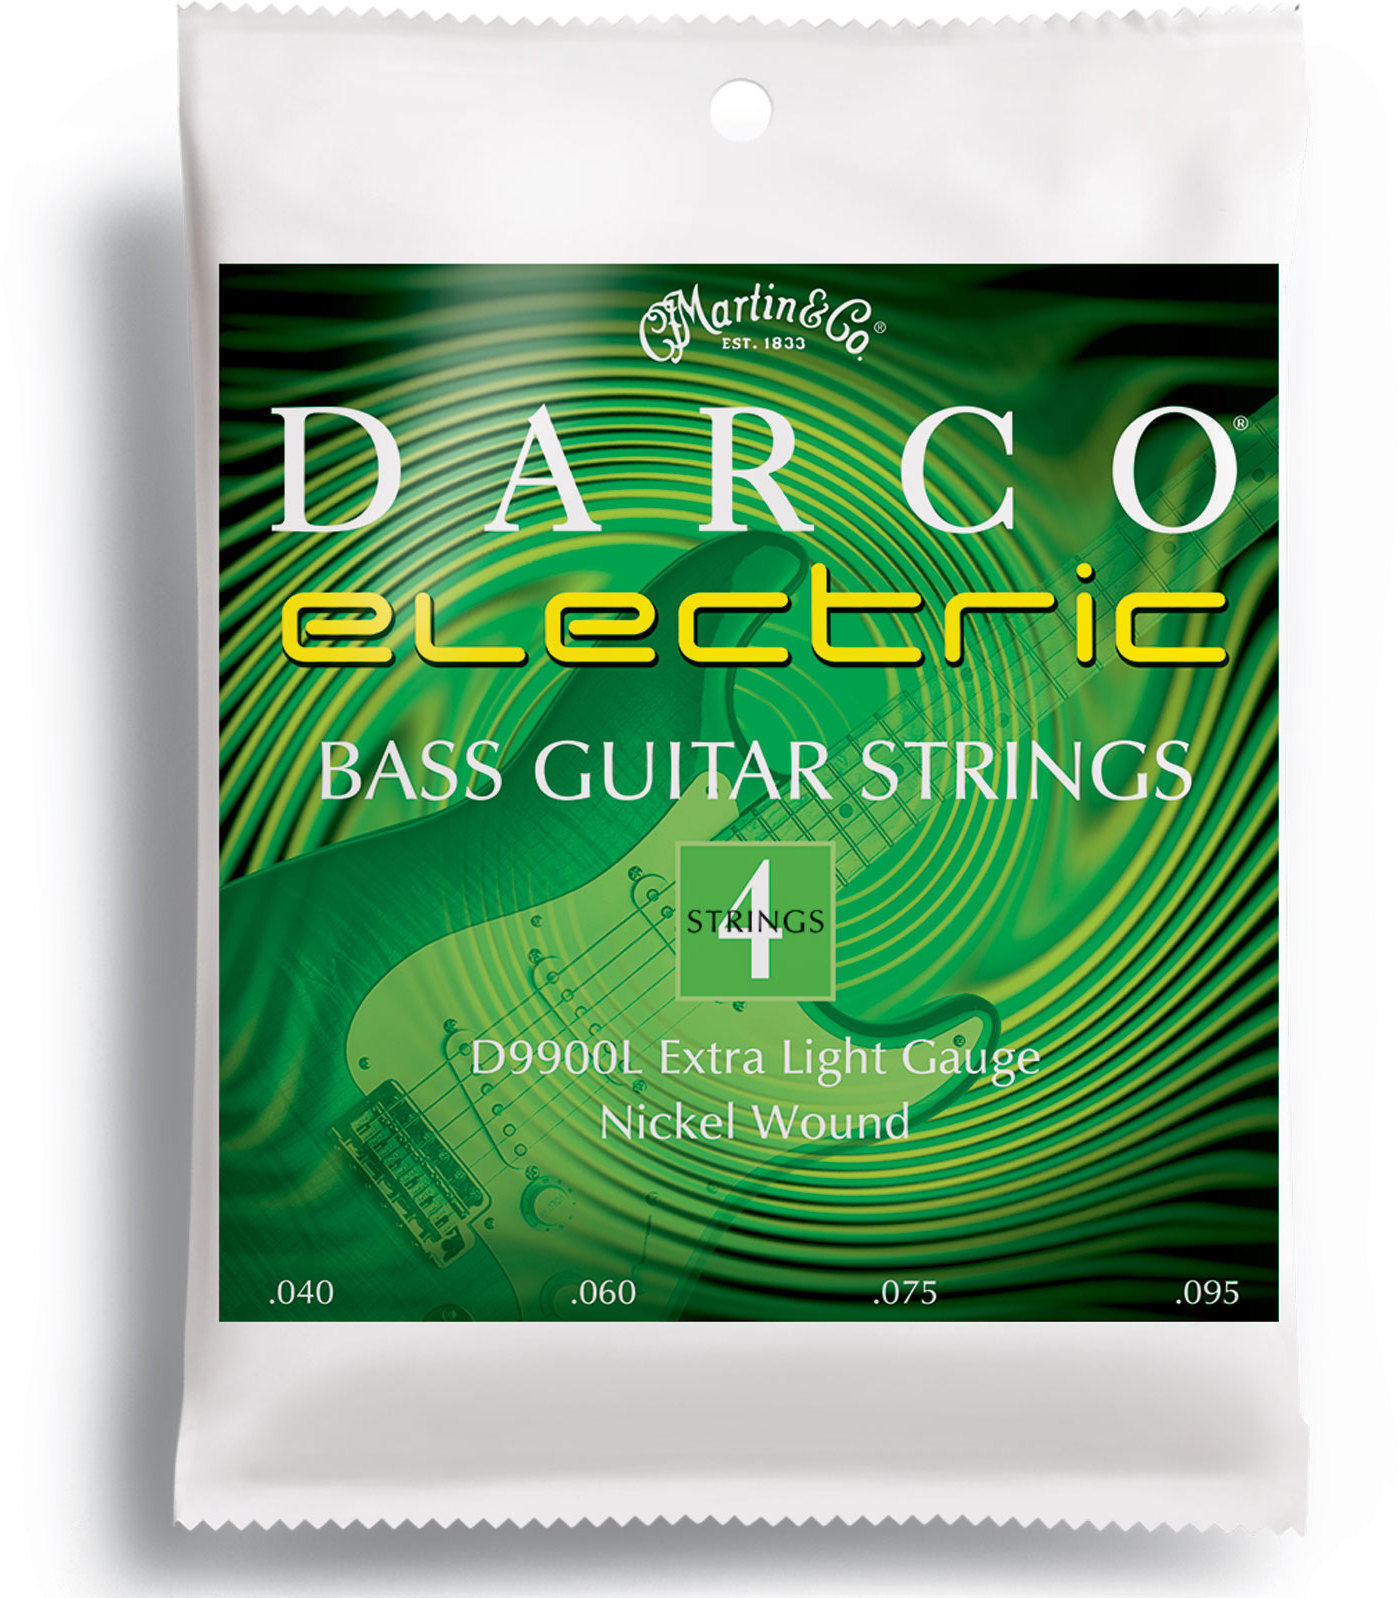 Bassguitar strings Martin D9900L Darco Four String Electric Bass, Extra Light